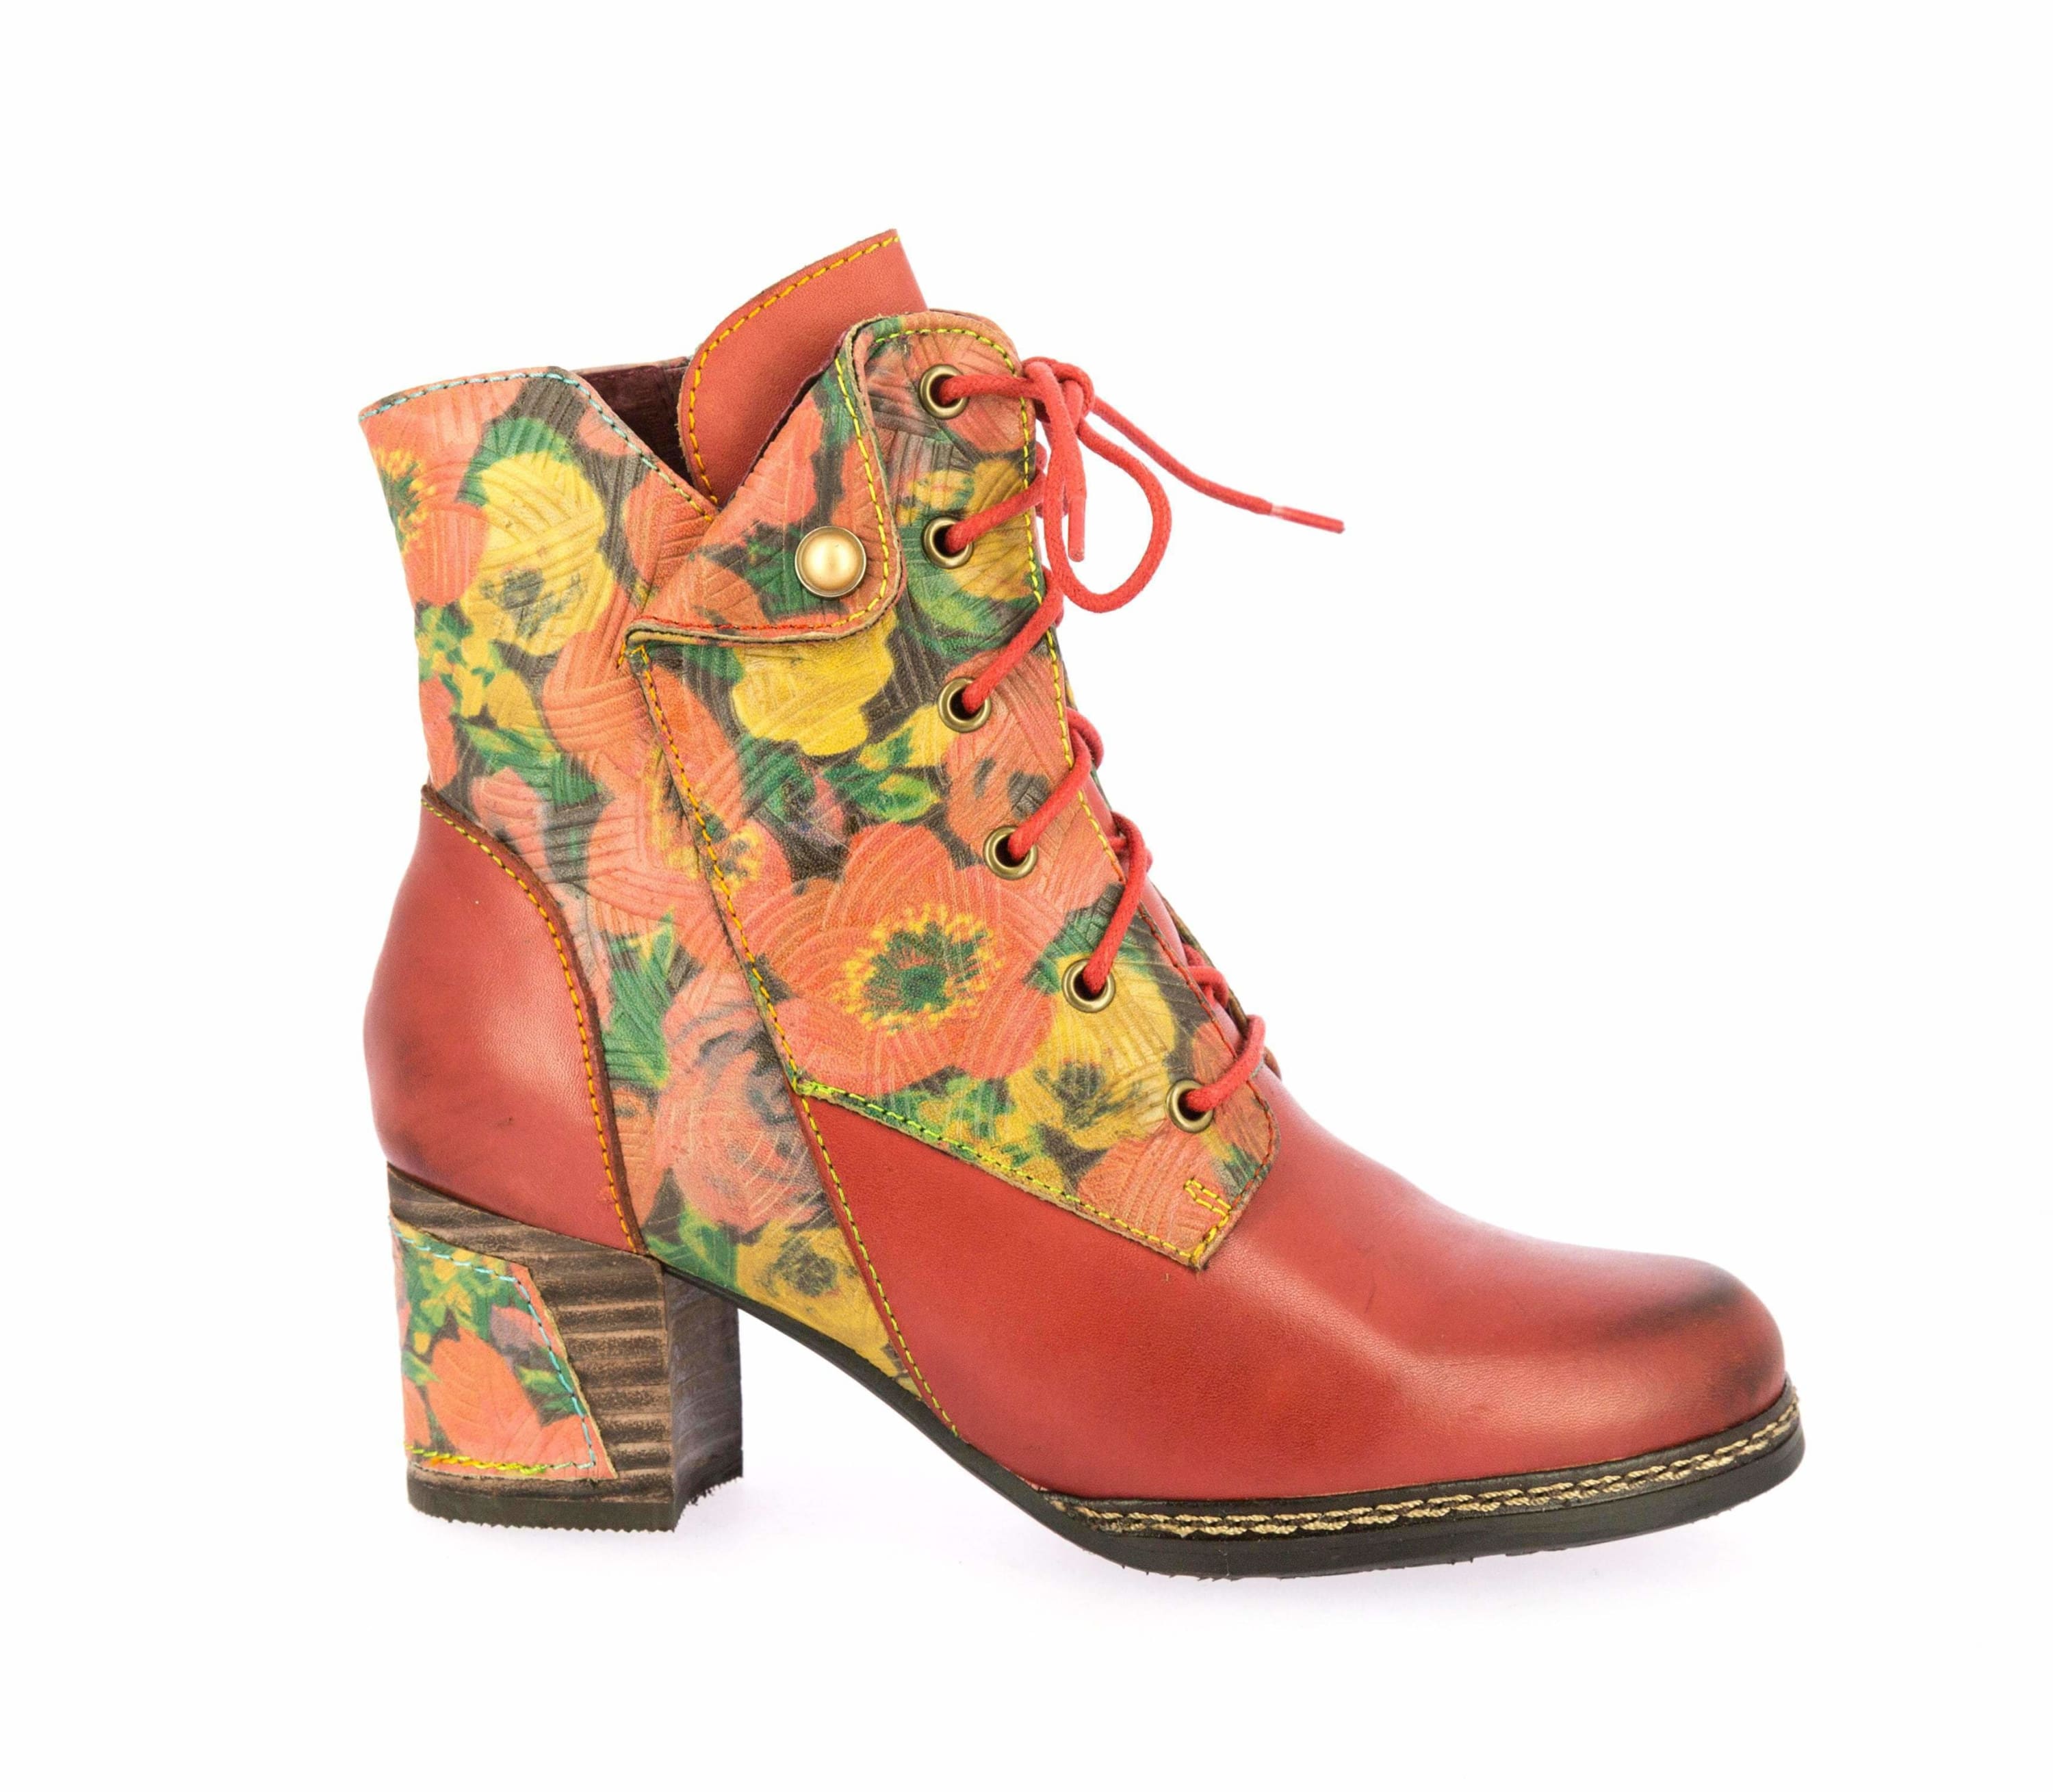 Shoe ELLA 05 - 35 / RED - Boot